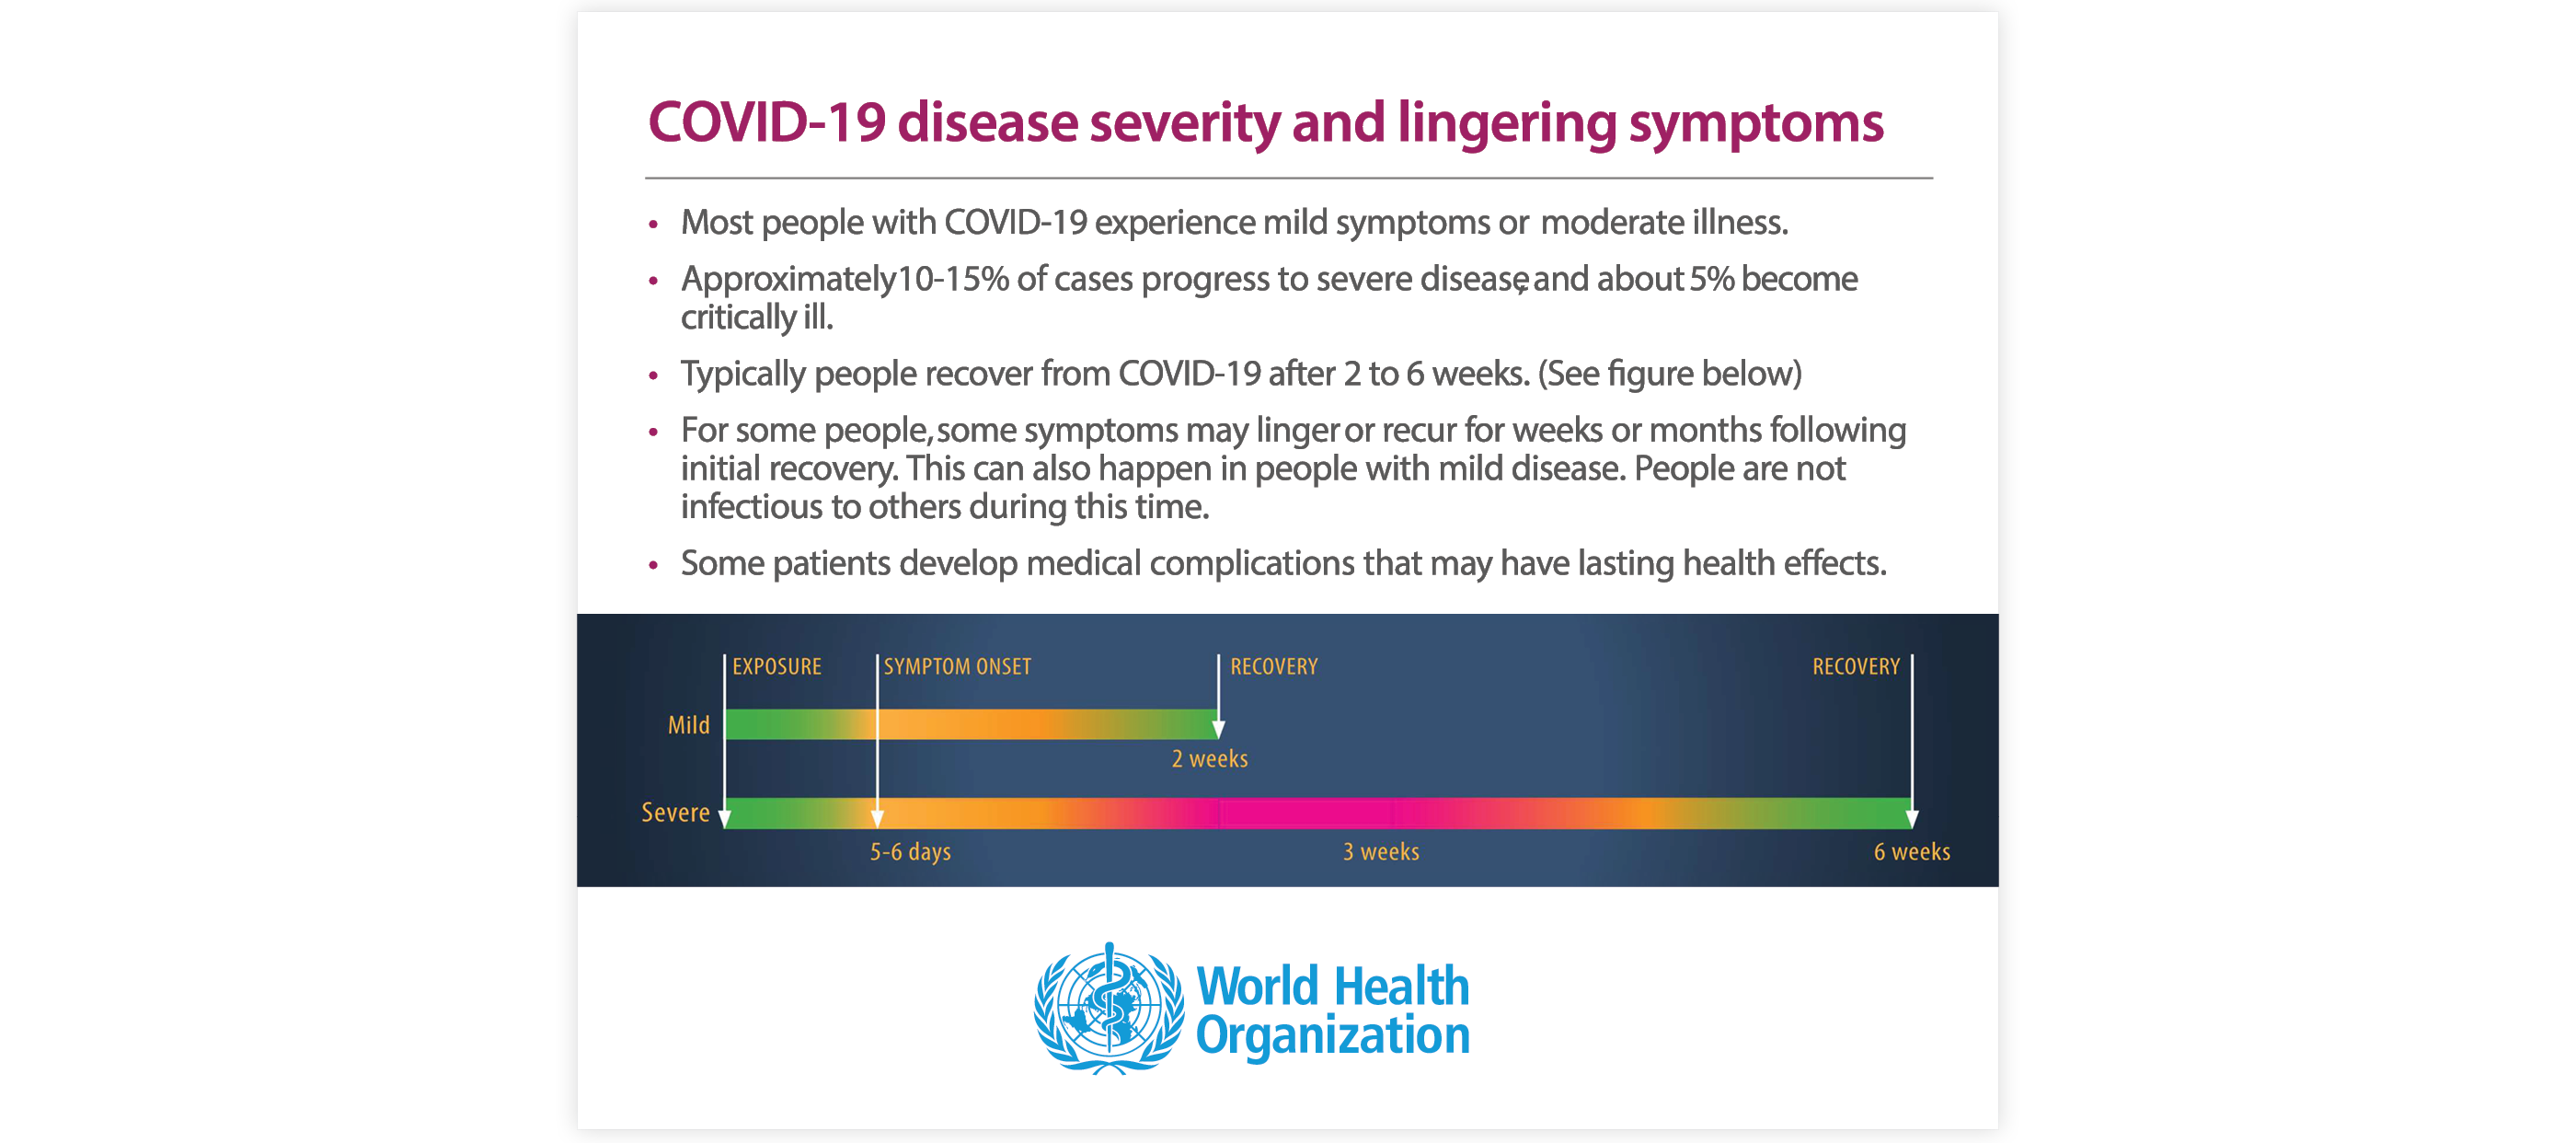 Covid-19 disease severity and lingering symptoms